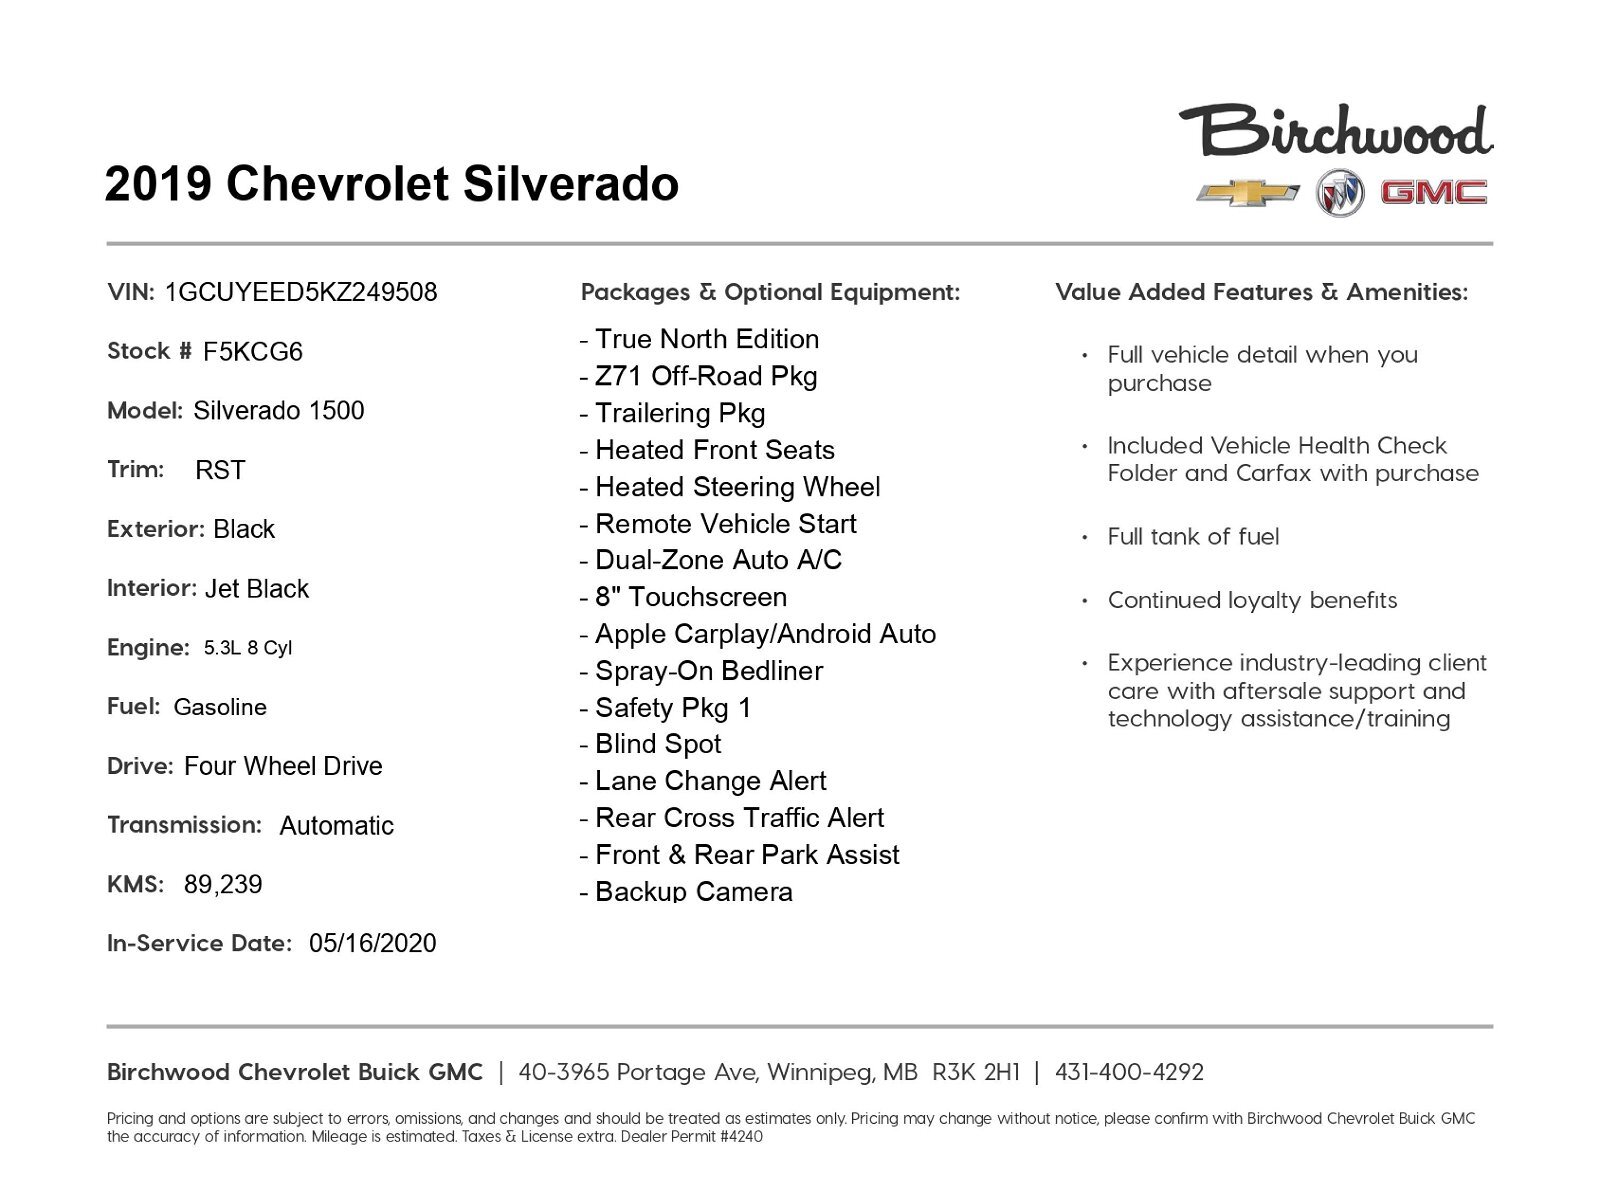 2019 Chevrolet Silverado 1500 RST 2-year Maintenance Free!